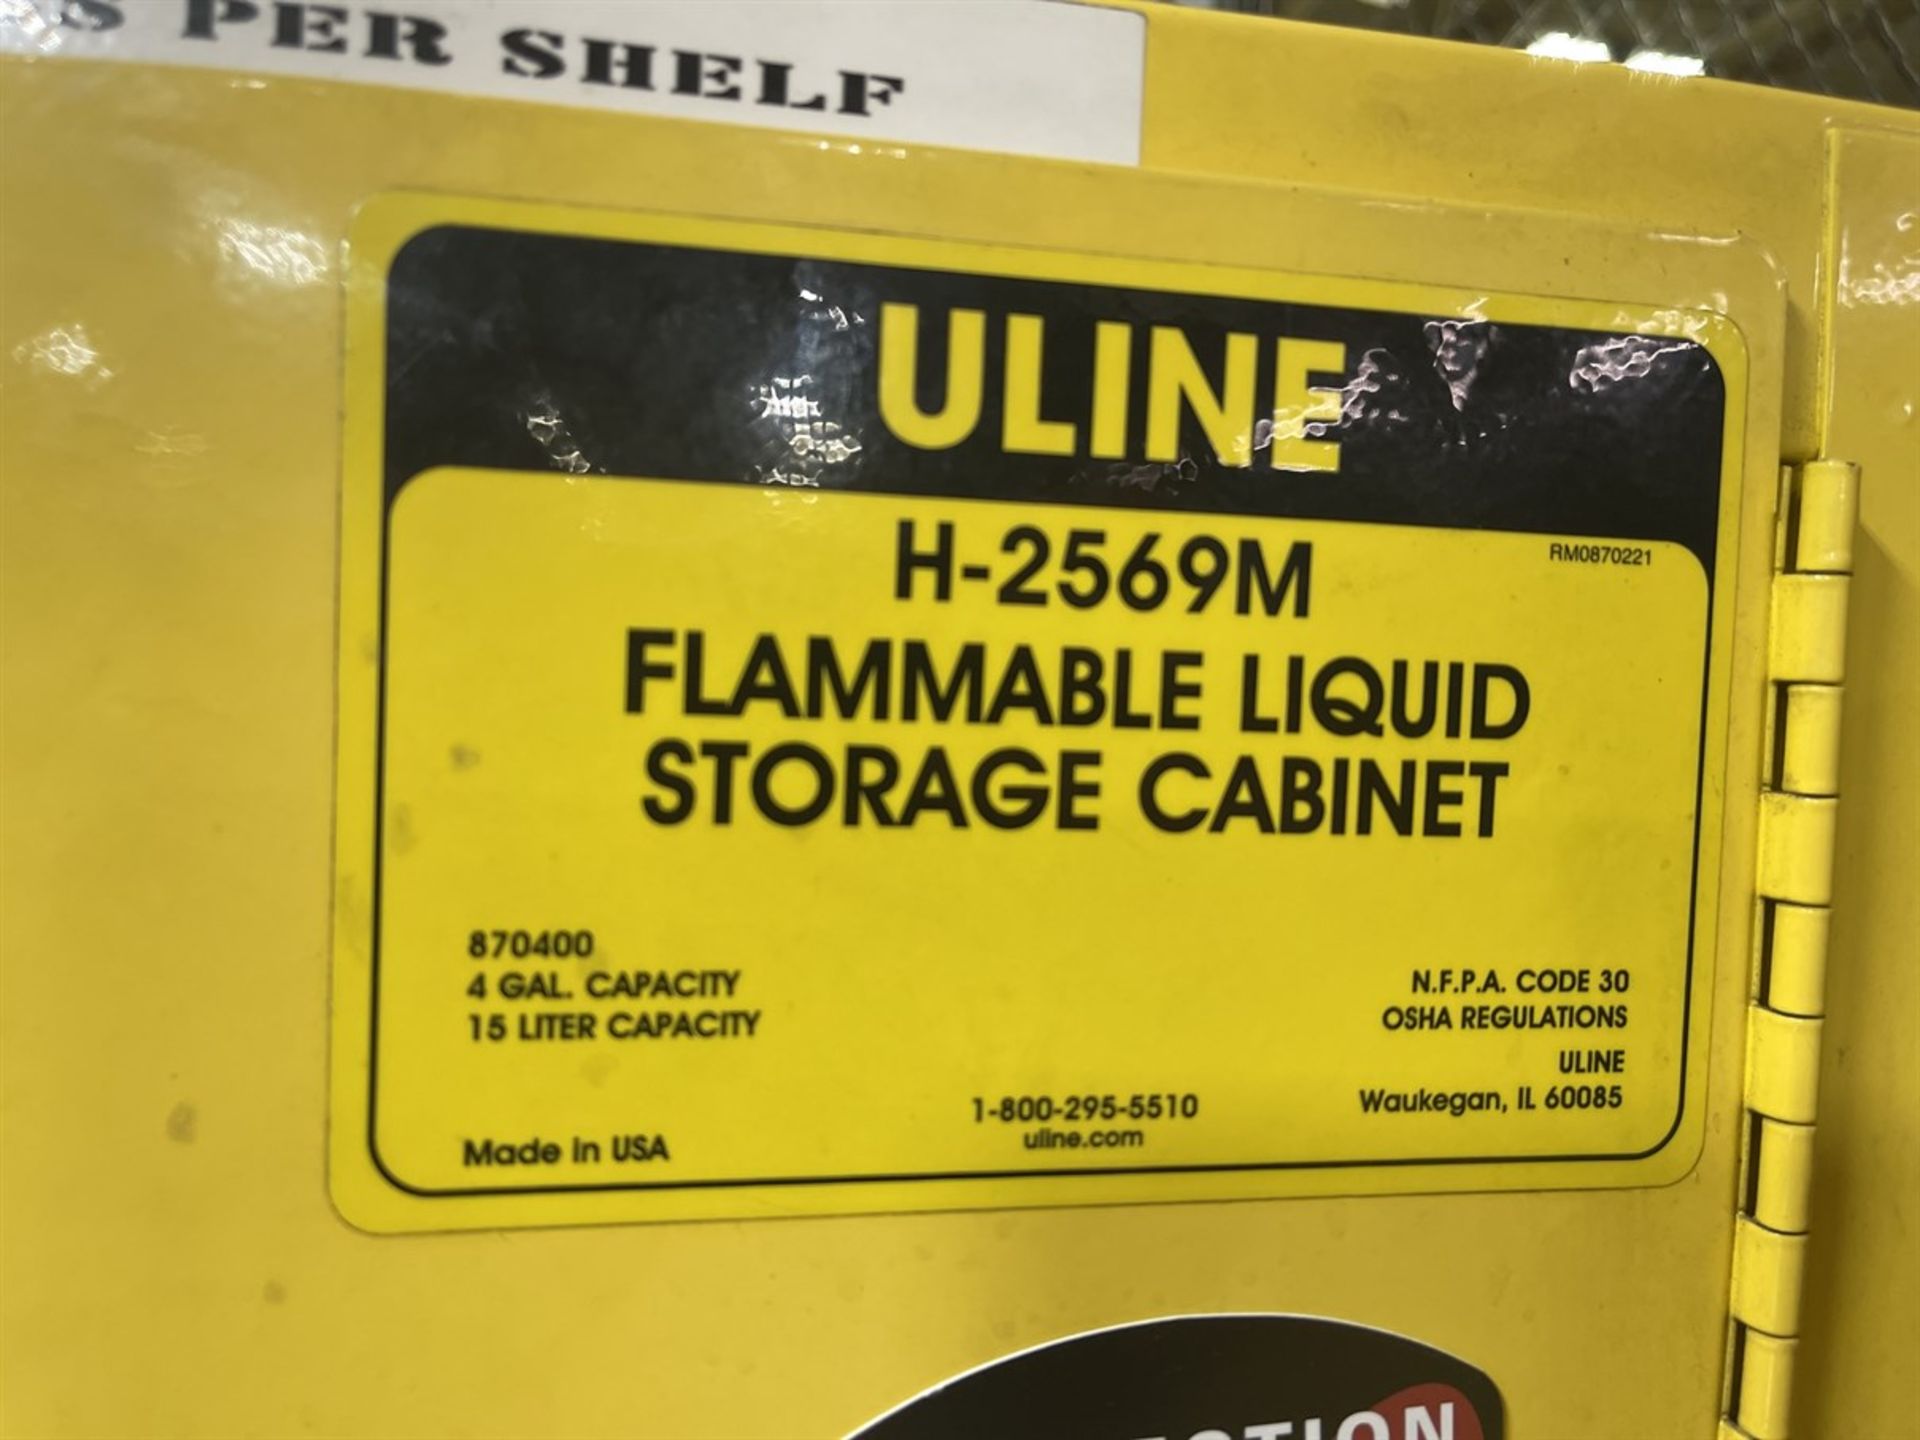 ULINE H-2569M 4 Gallon Flammable Liquid Cabinet - Image 2 of 3